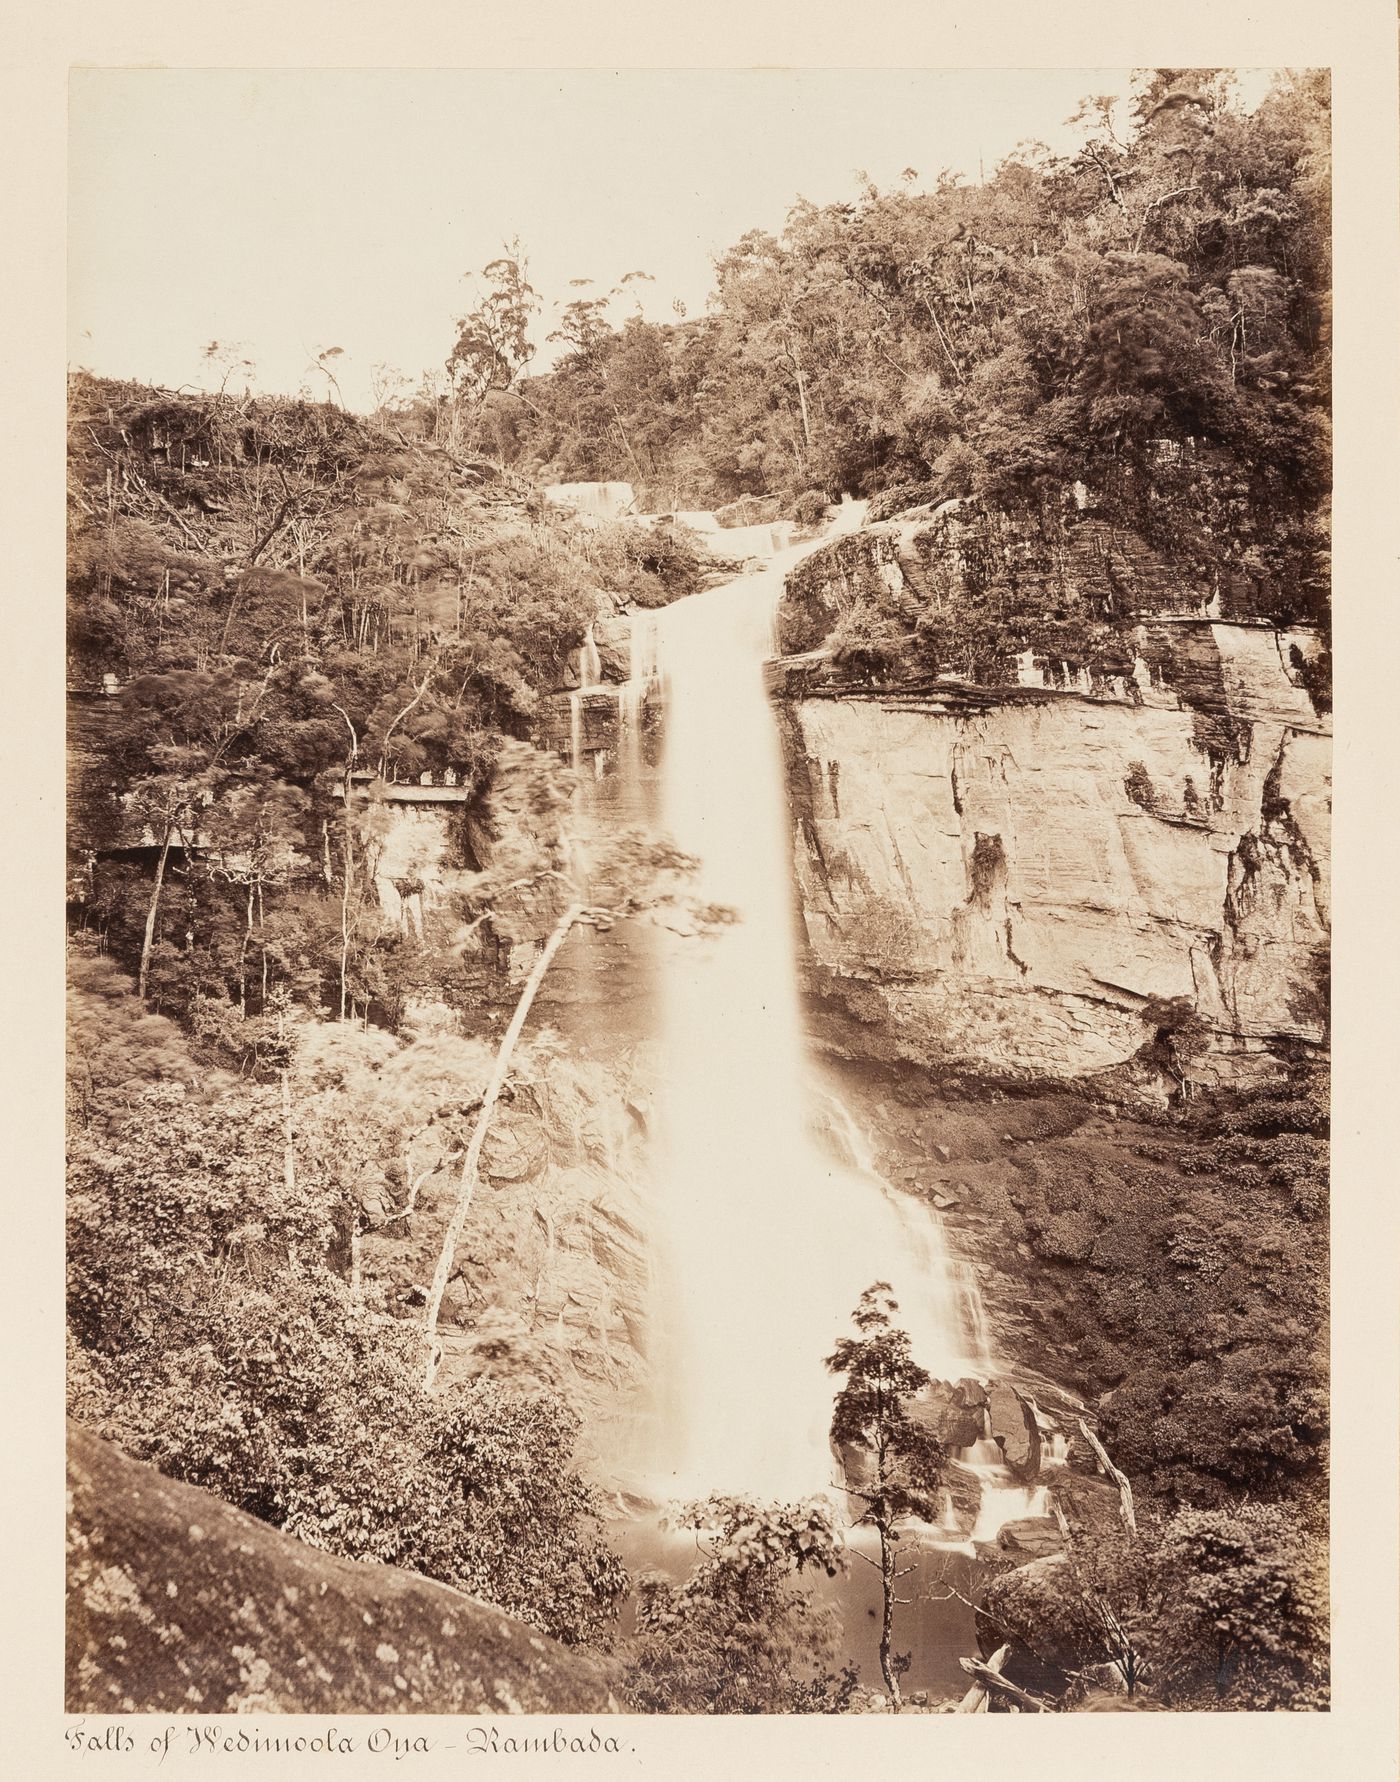 View of the Falls of Wedimoola Oya, Ramboda, Ceylon (now Sri Lanka)